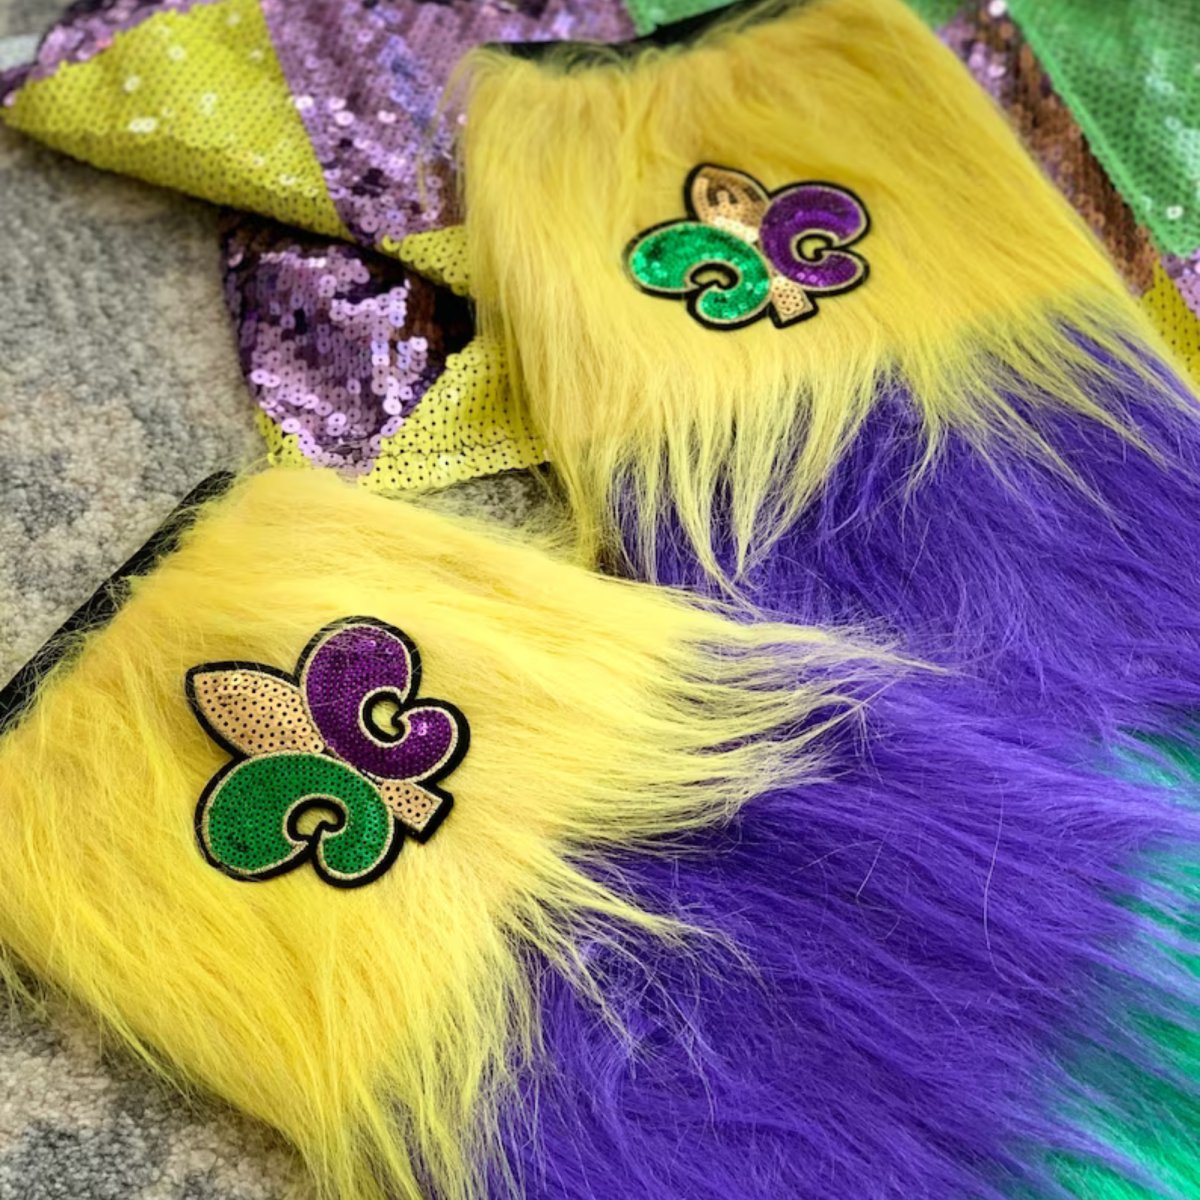 Mardi Gras Leg Warmers Fury Striped Purple Green And Gold - Mardi Gras Apparel